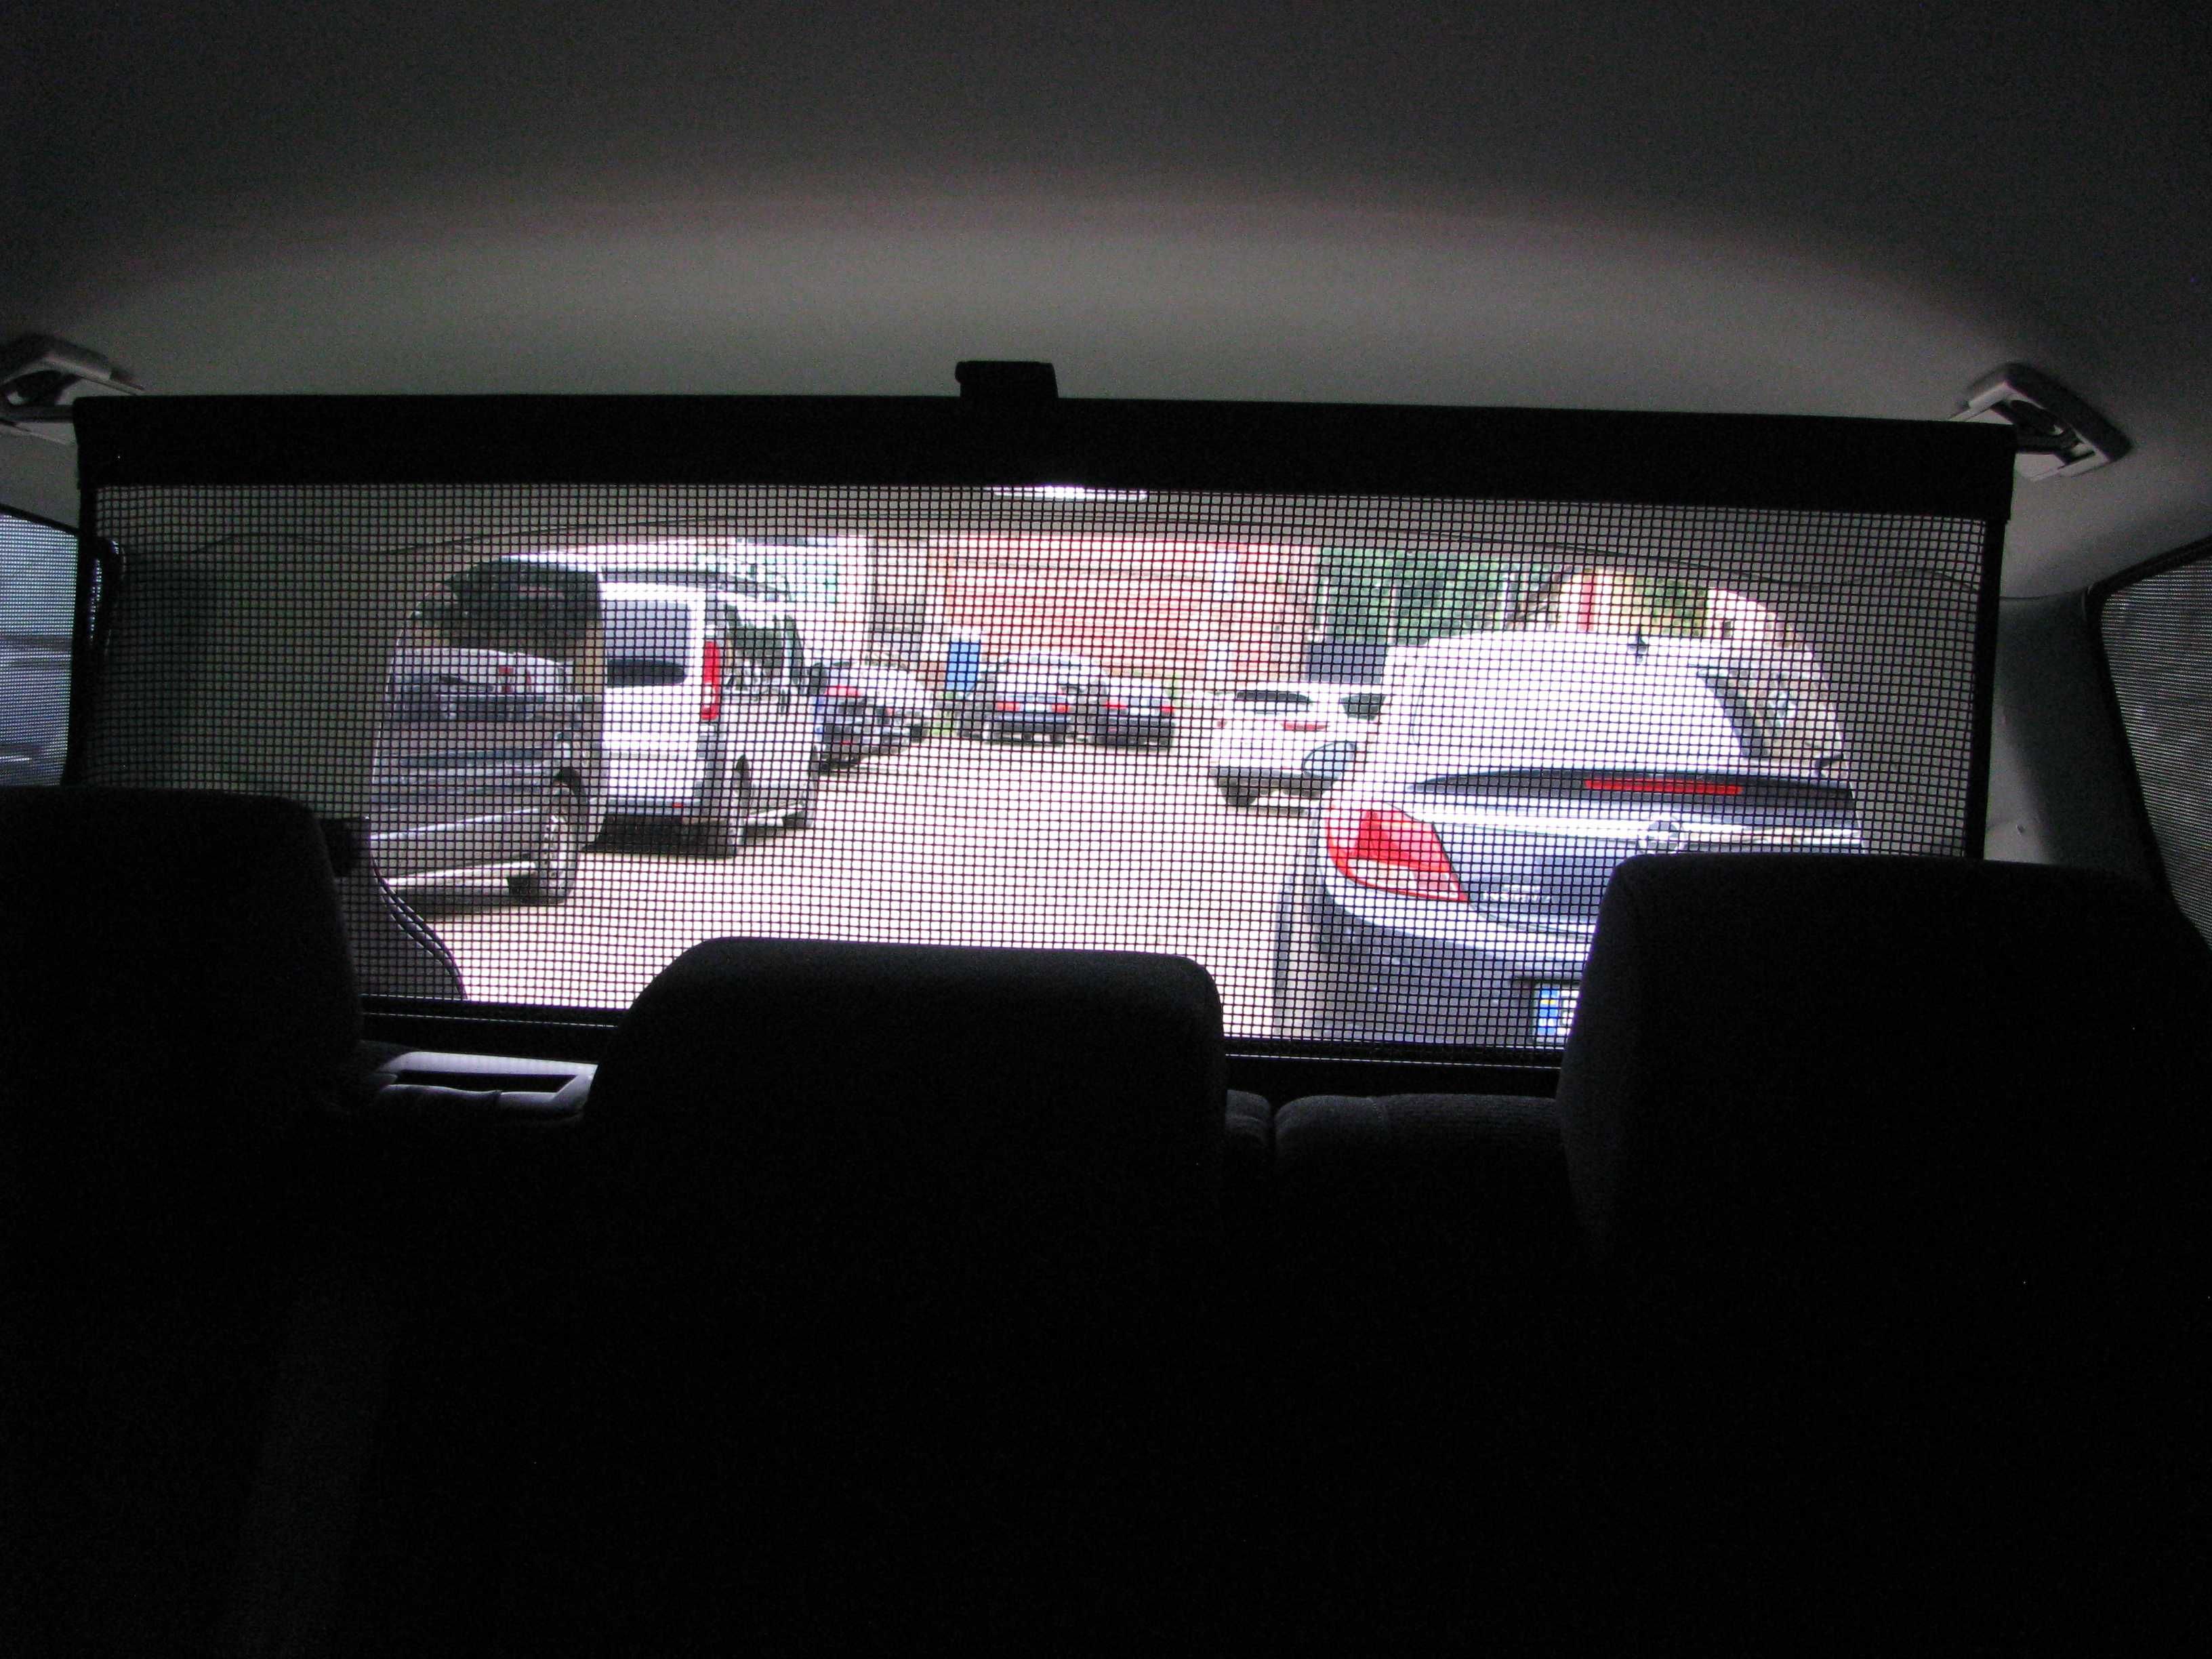 Сітка-шторка-перегородка в багажник пасата Б-5, Б-6(,ролет-шторка)